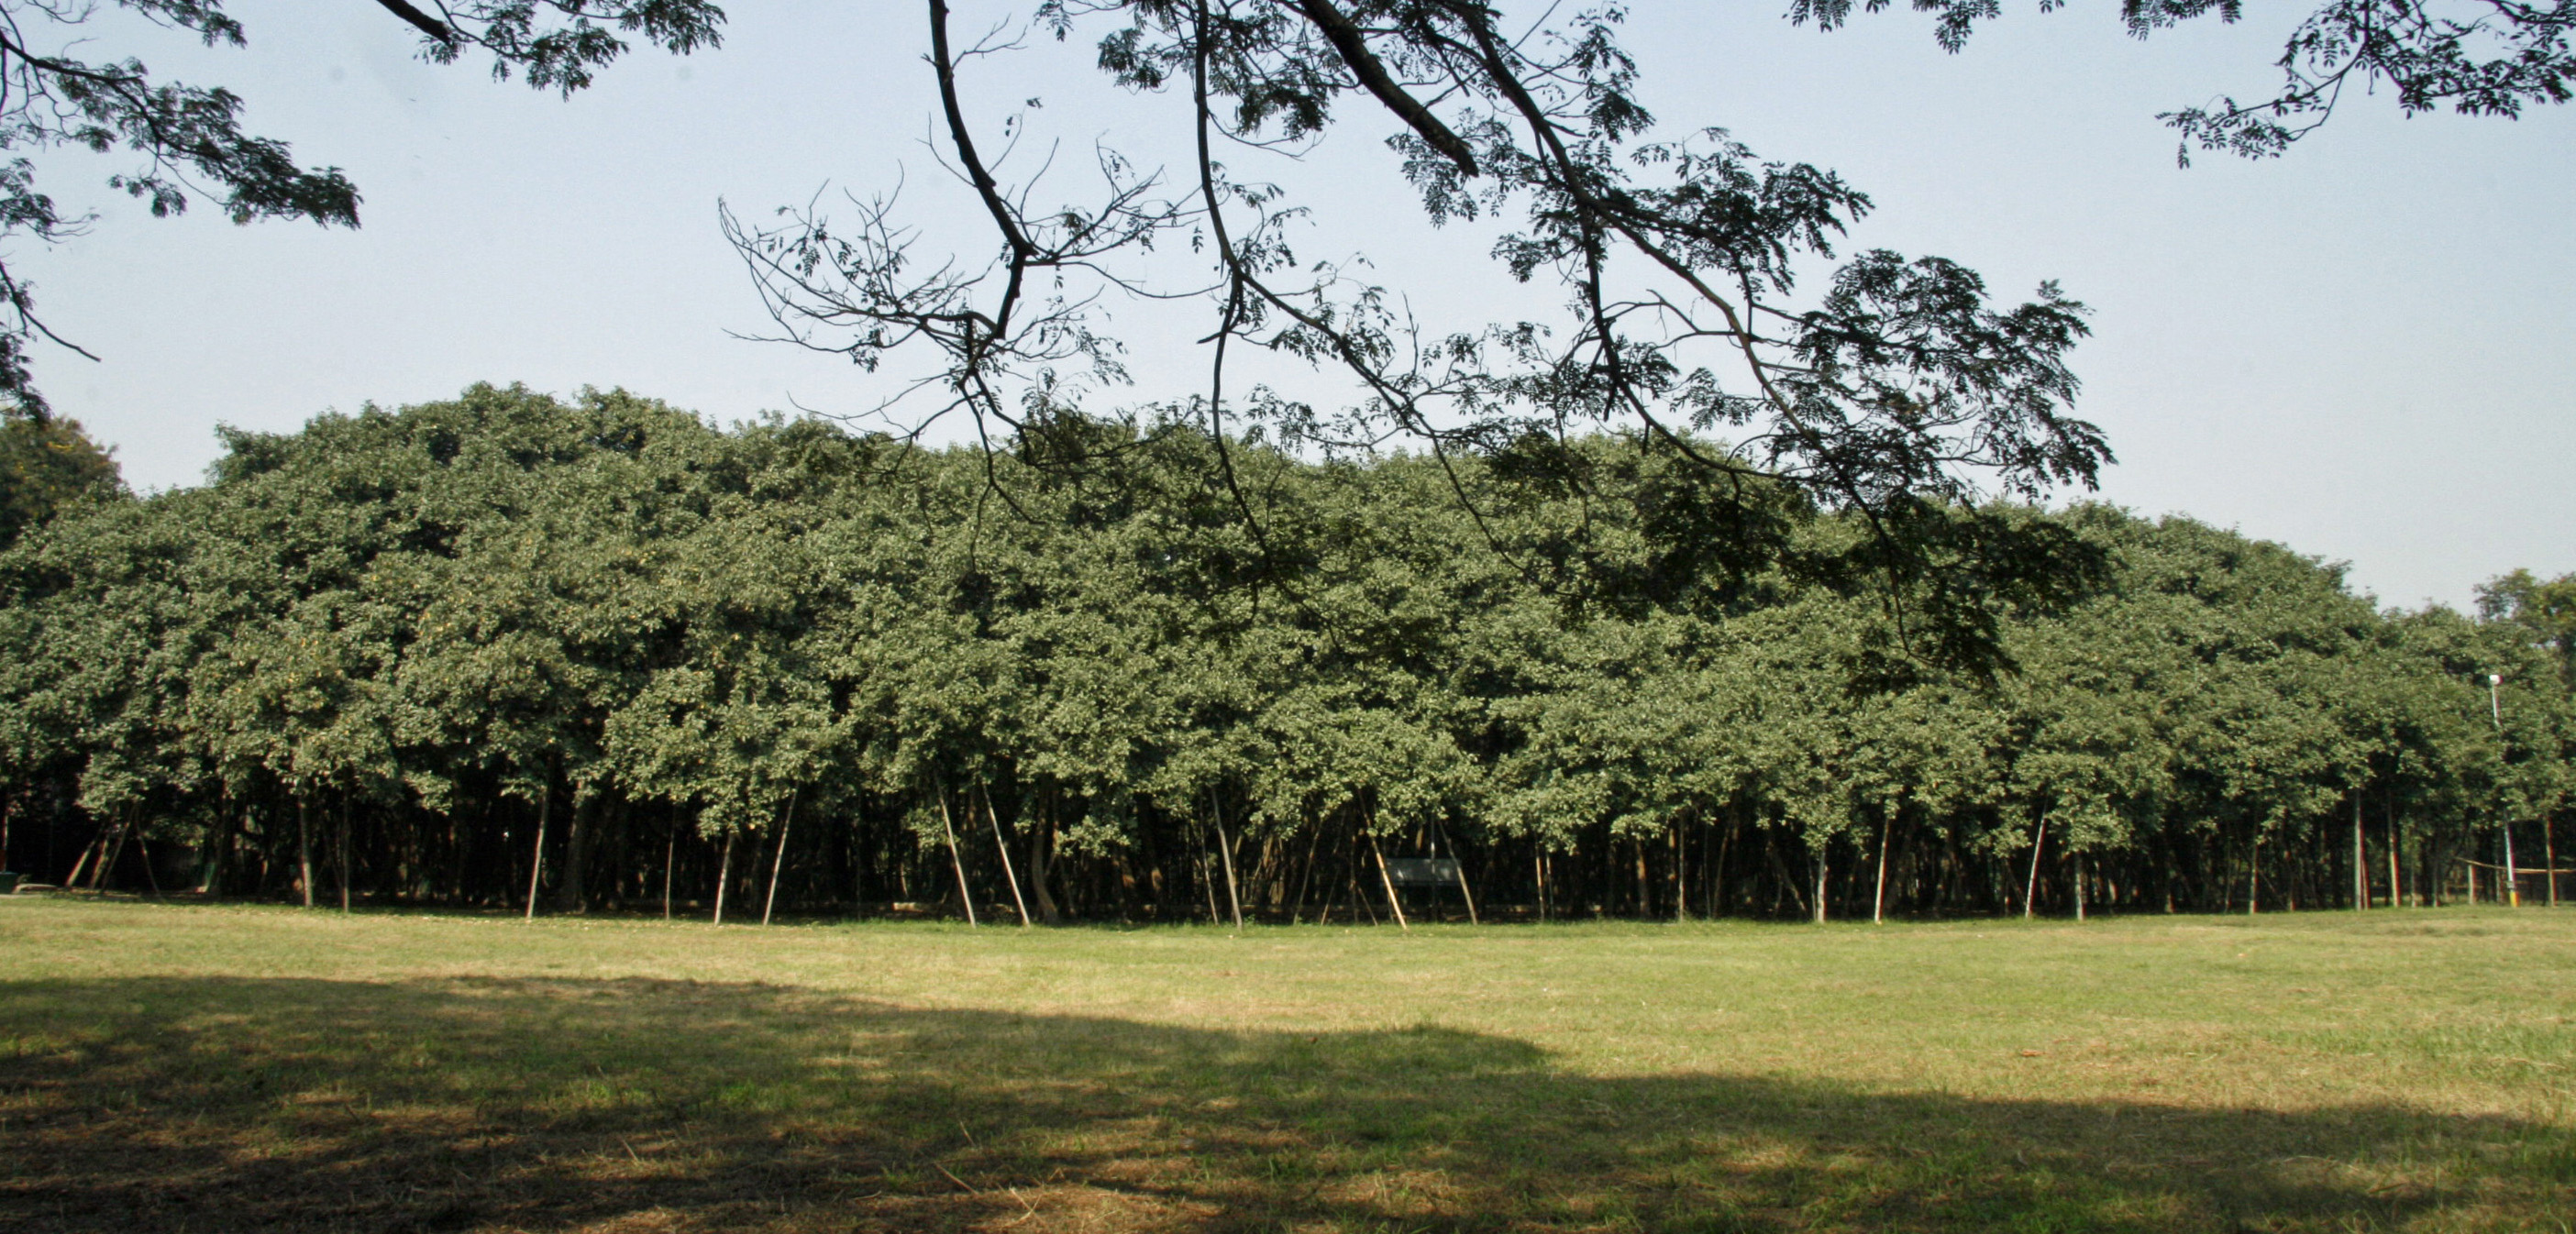 National Tree of India (Banyan) - An Essay